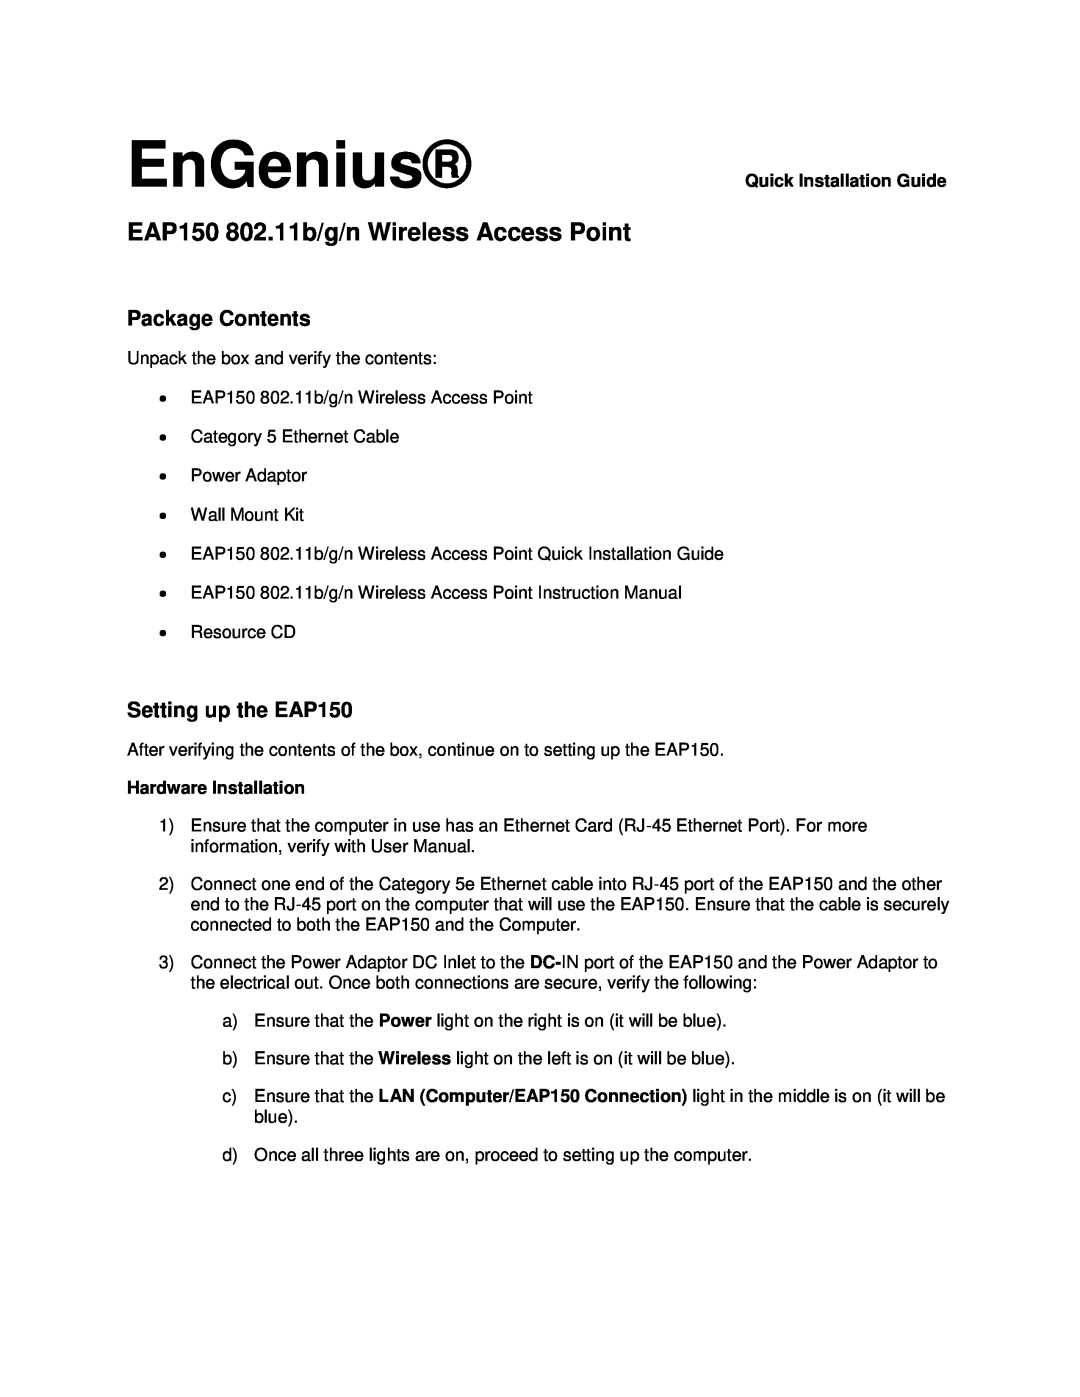 EnGenius Technologies EAP150 instruction manual Quick Installation Guide, Hardware Installation, EnGenius 